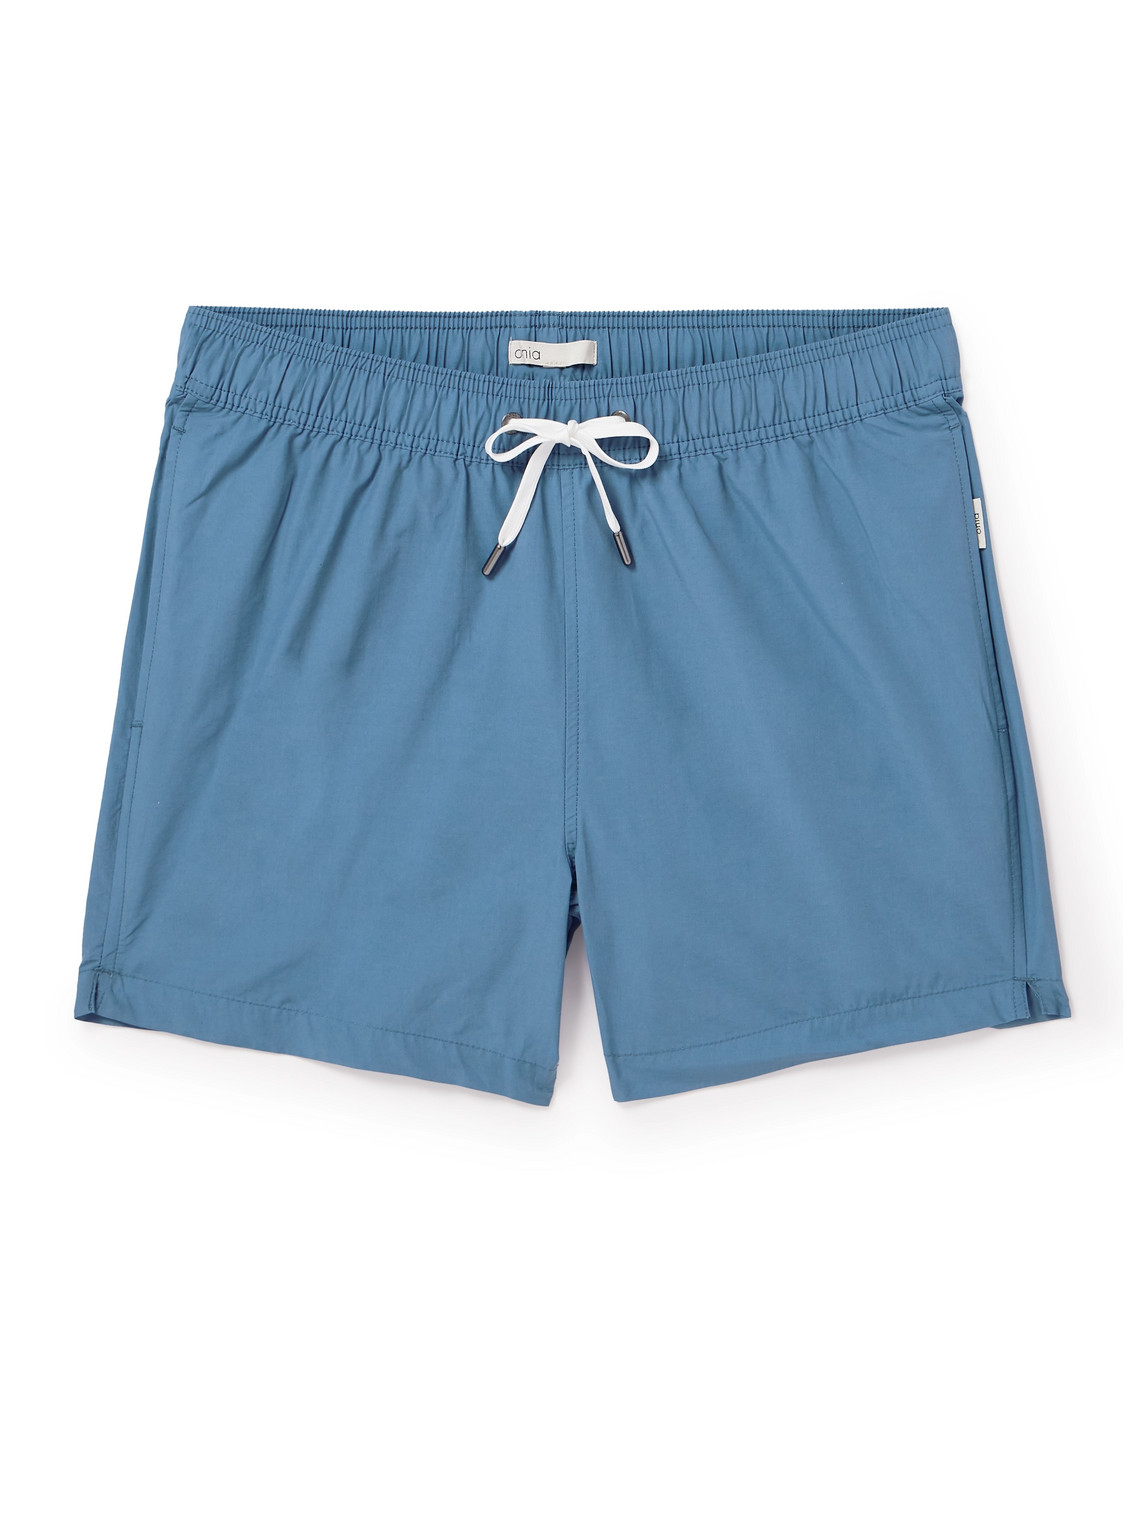 Onia - Charles Straight-Leg Mid-Length Swim Shorts - Men - Blue - M von Onia